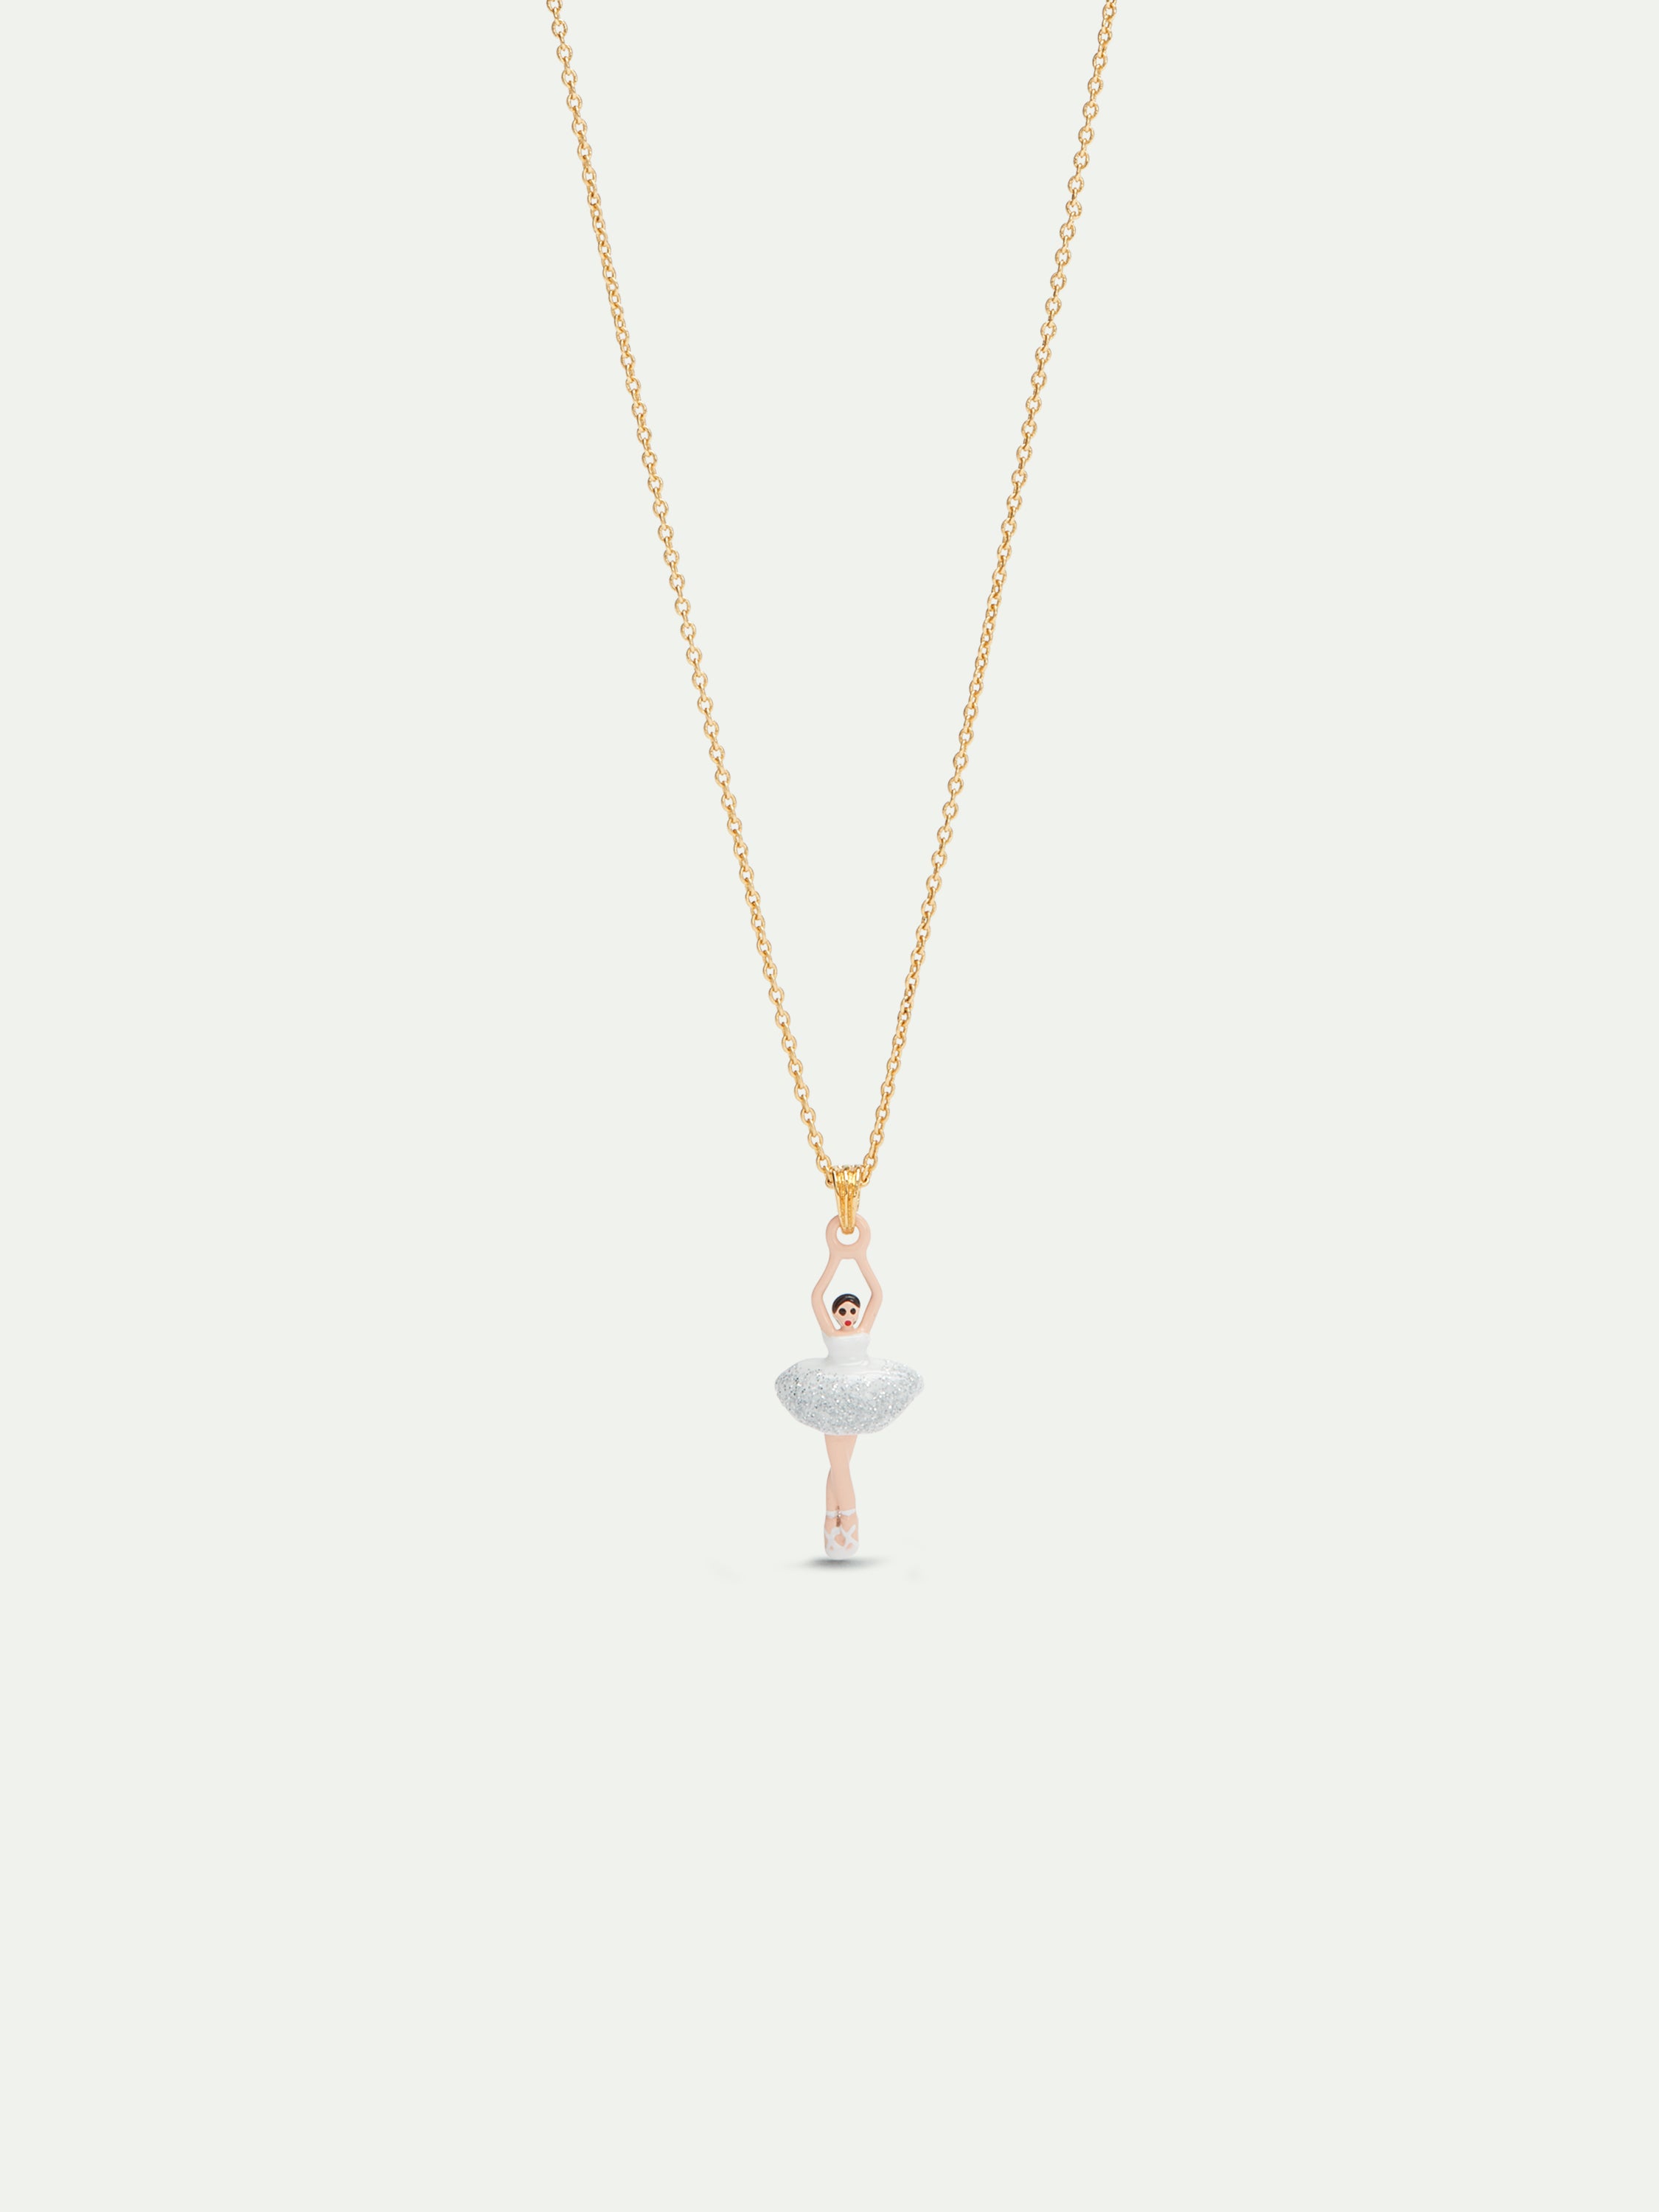 Ballerina wearing a white tutu with silver glitter pendant necklace